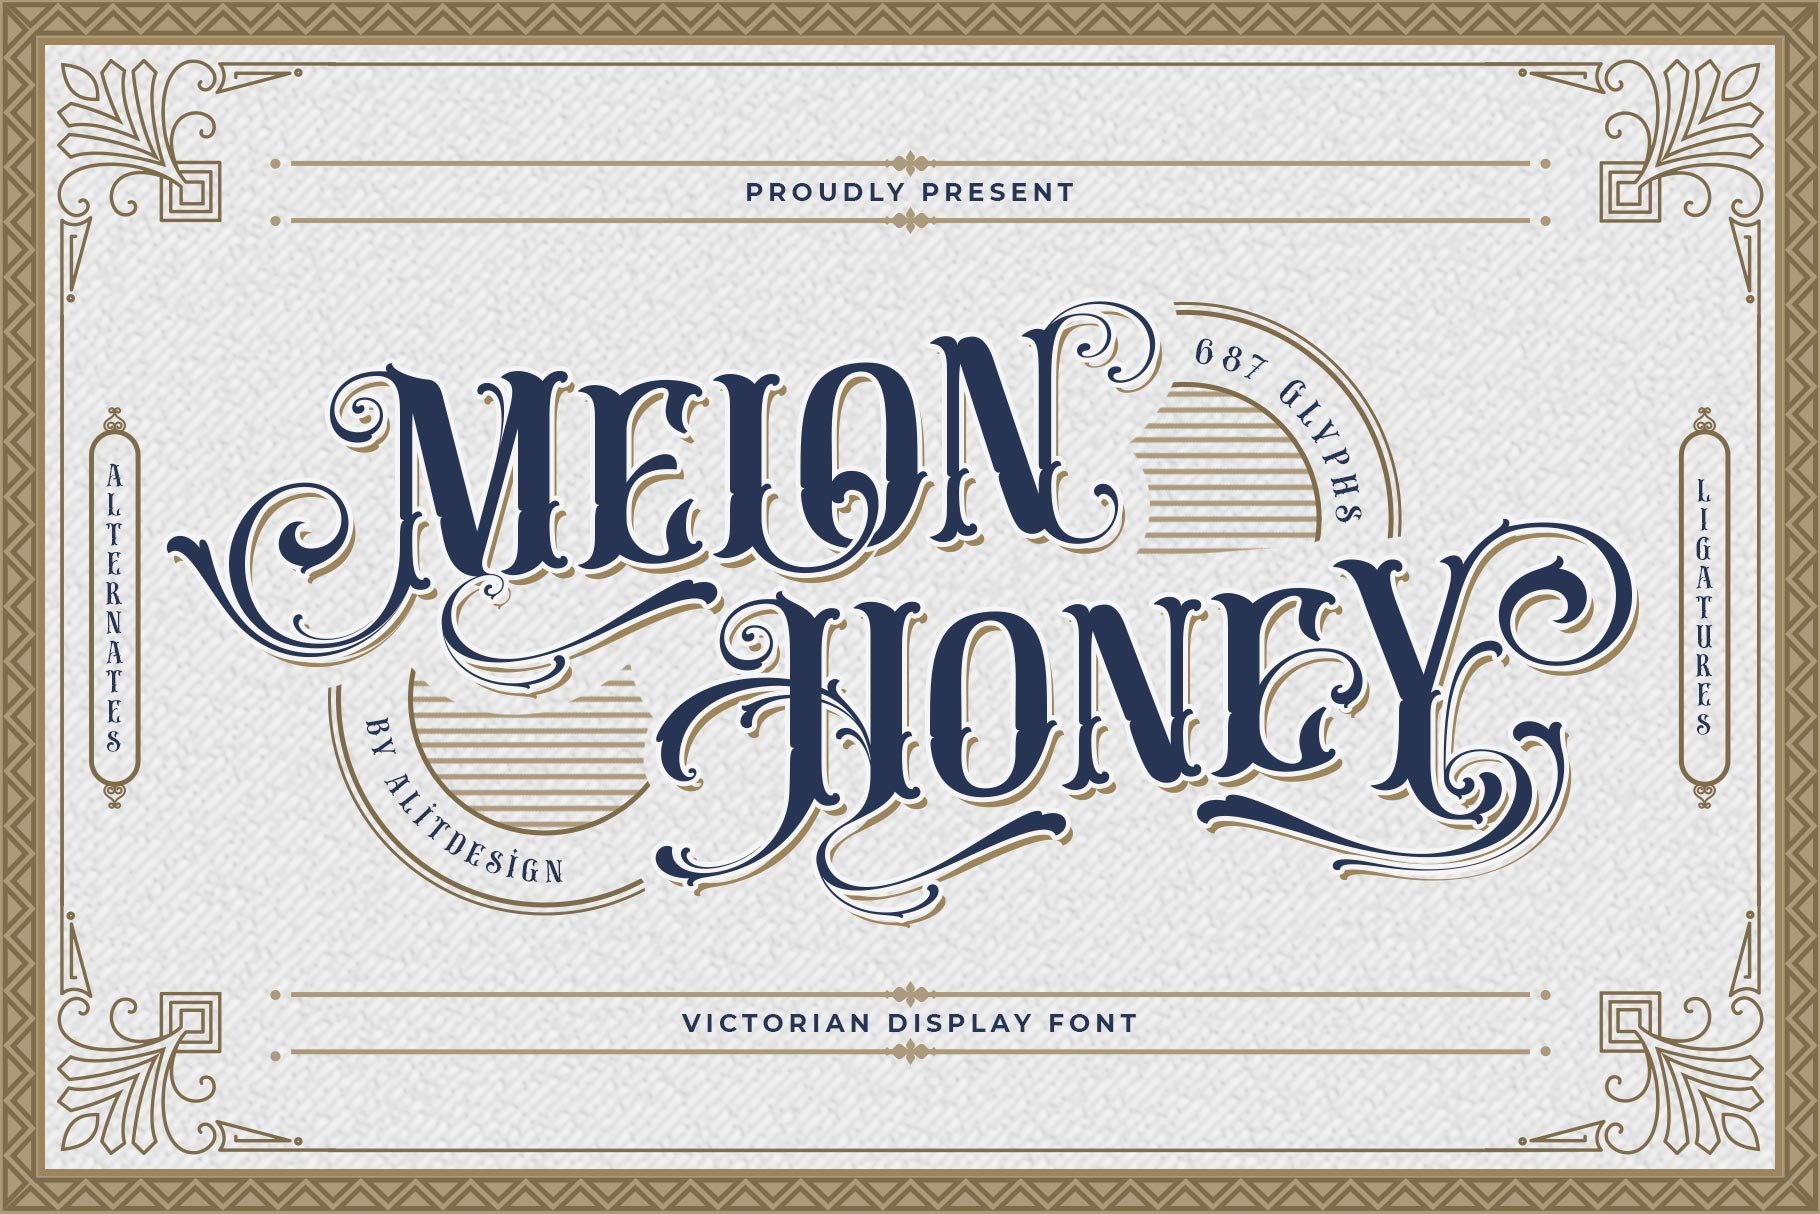 Melon Honey Typeface cover image.